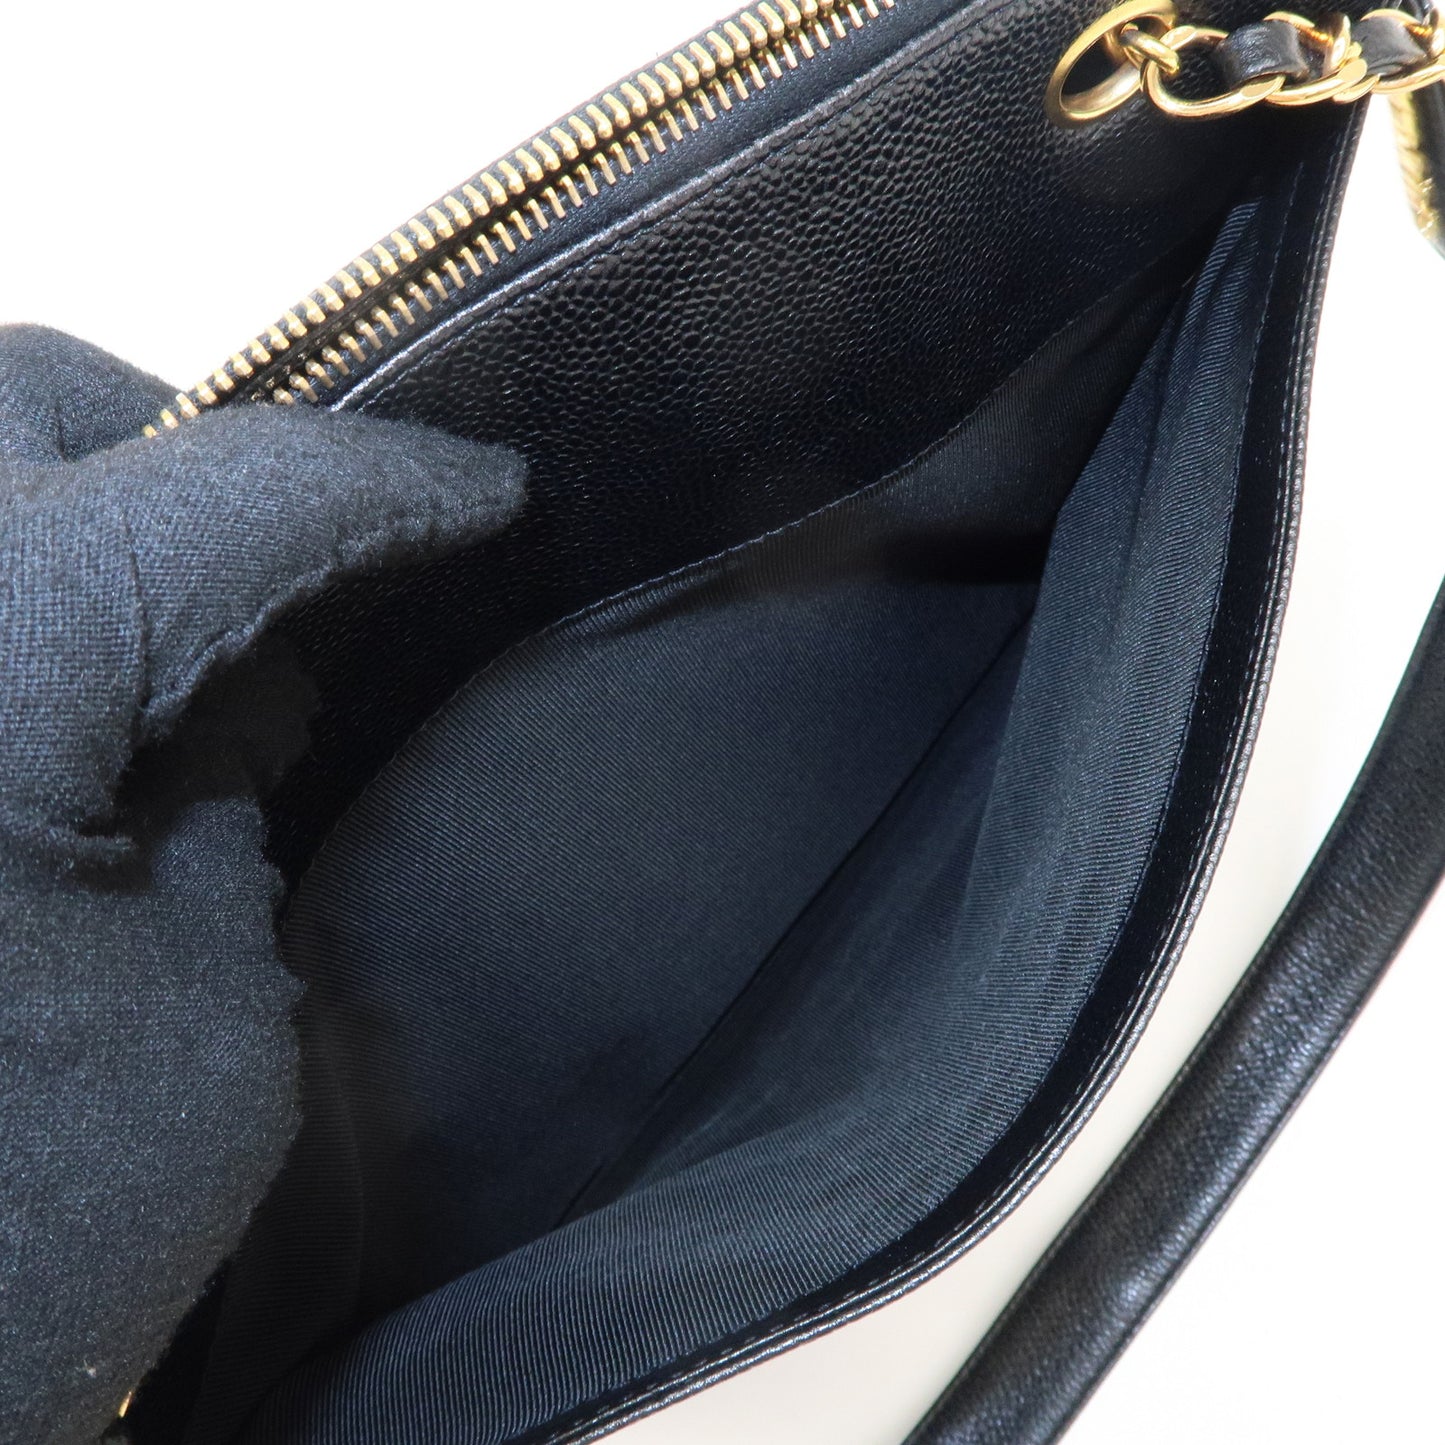 CHANEL Caviar Skin Chain Tote Bag Shoulder Bag Black Gold HDW